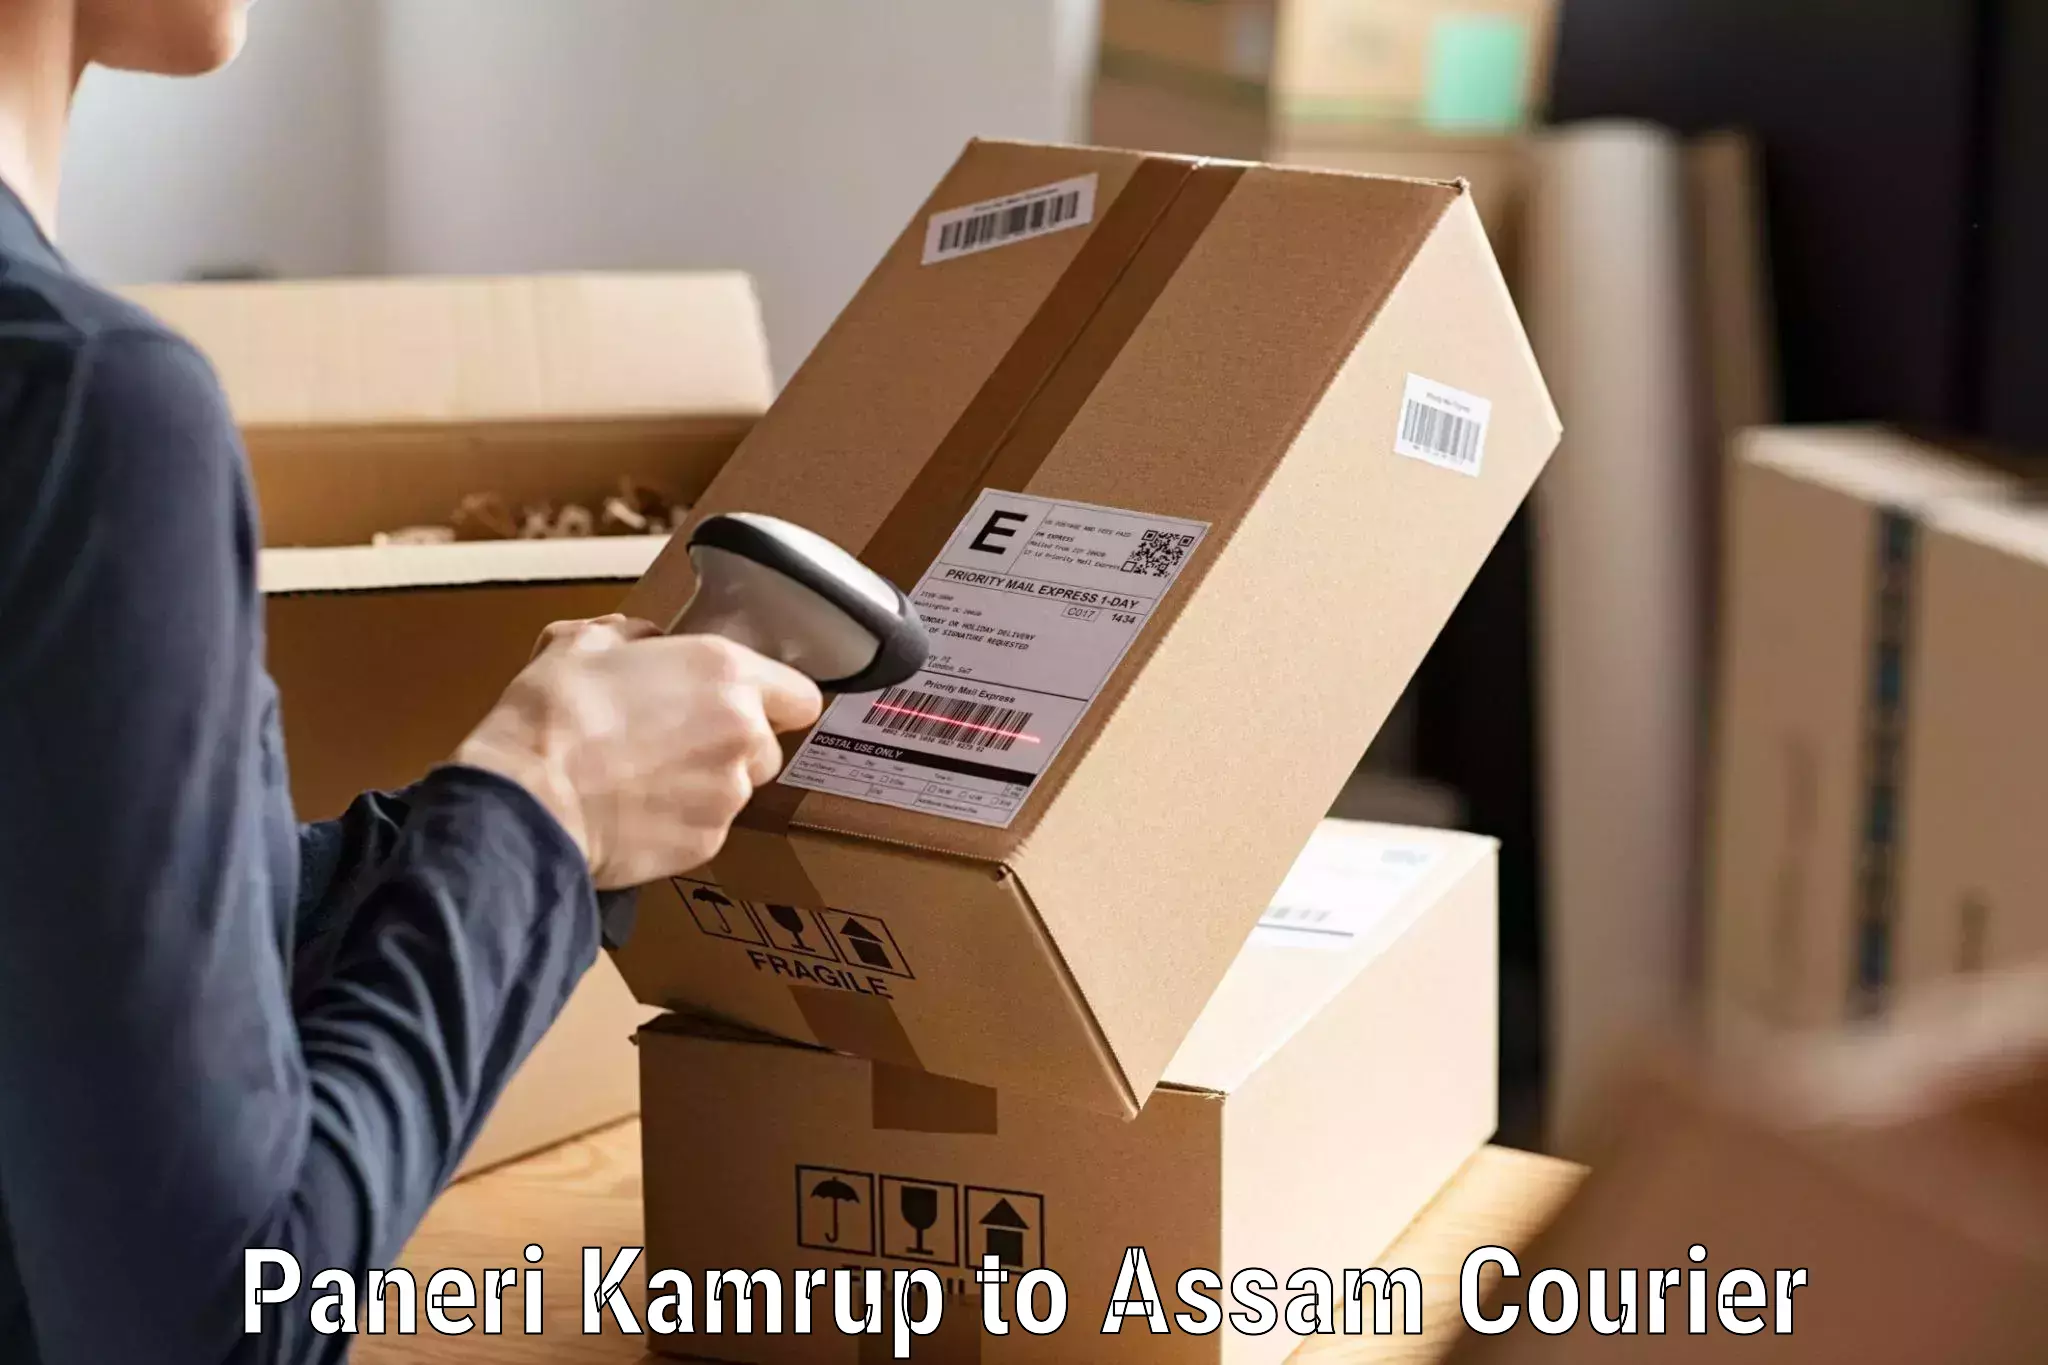 Automated shipping processes Paneri Kamrup to Lala Assam